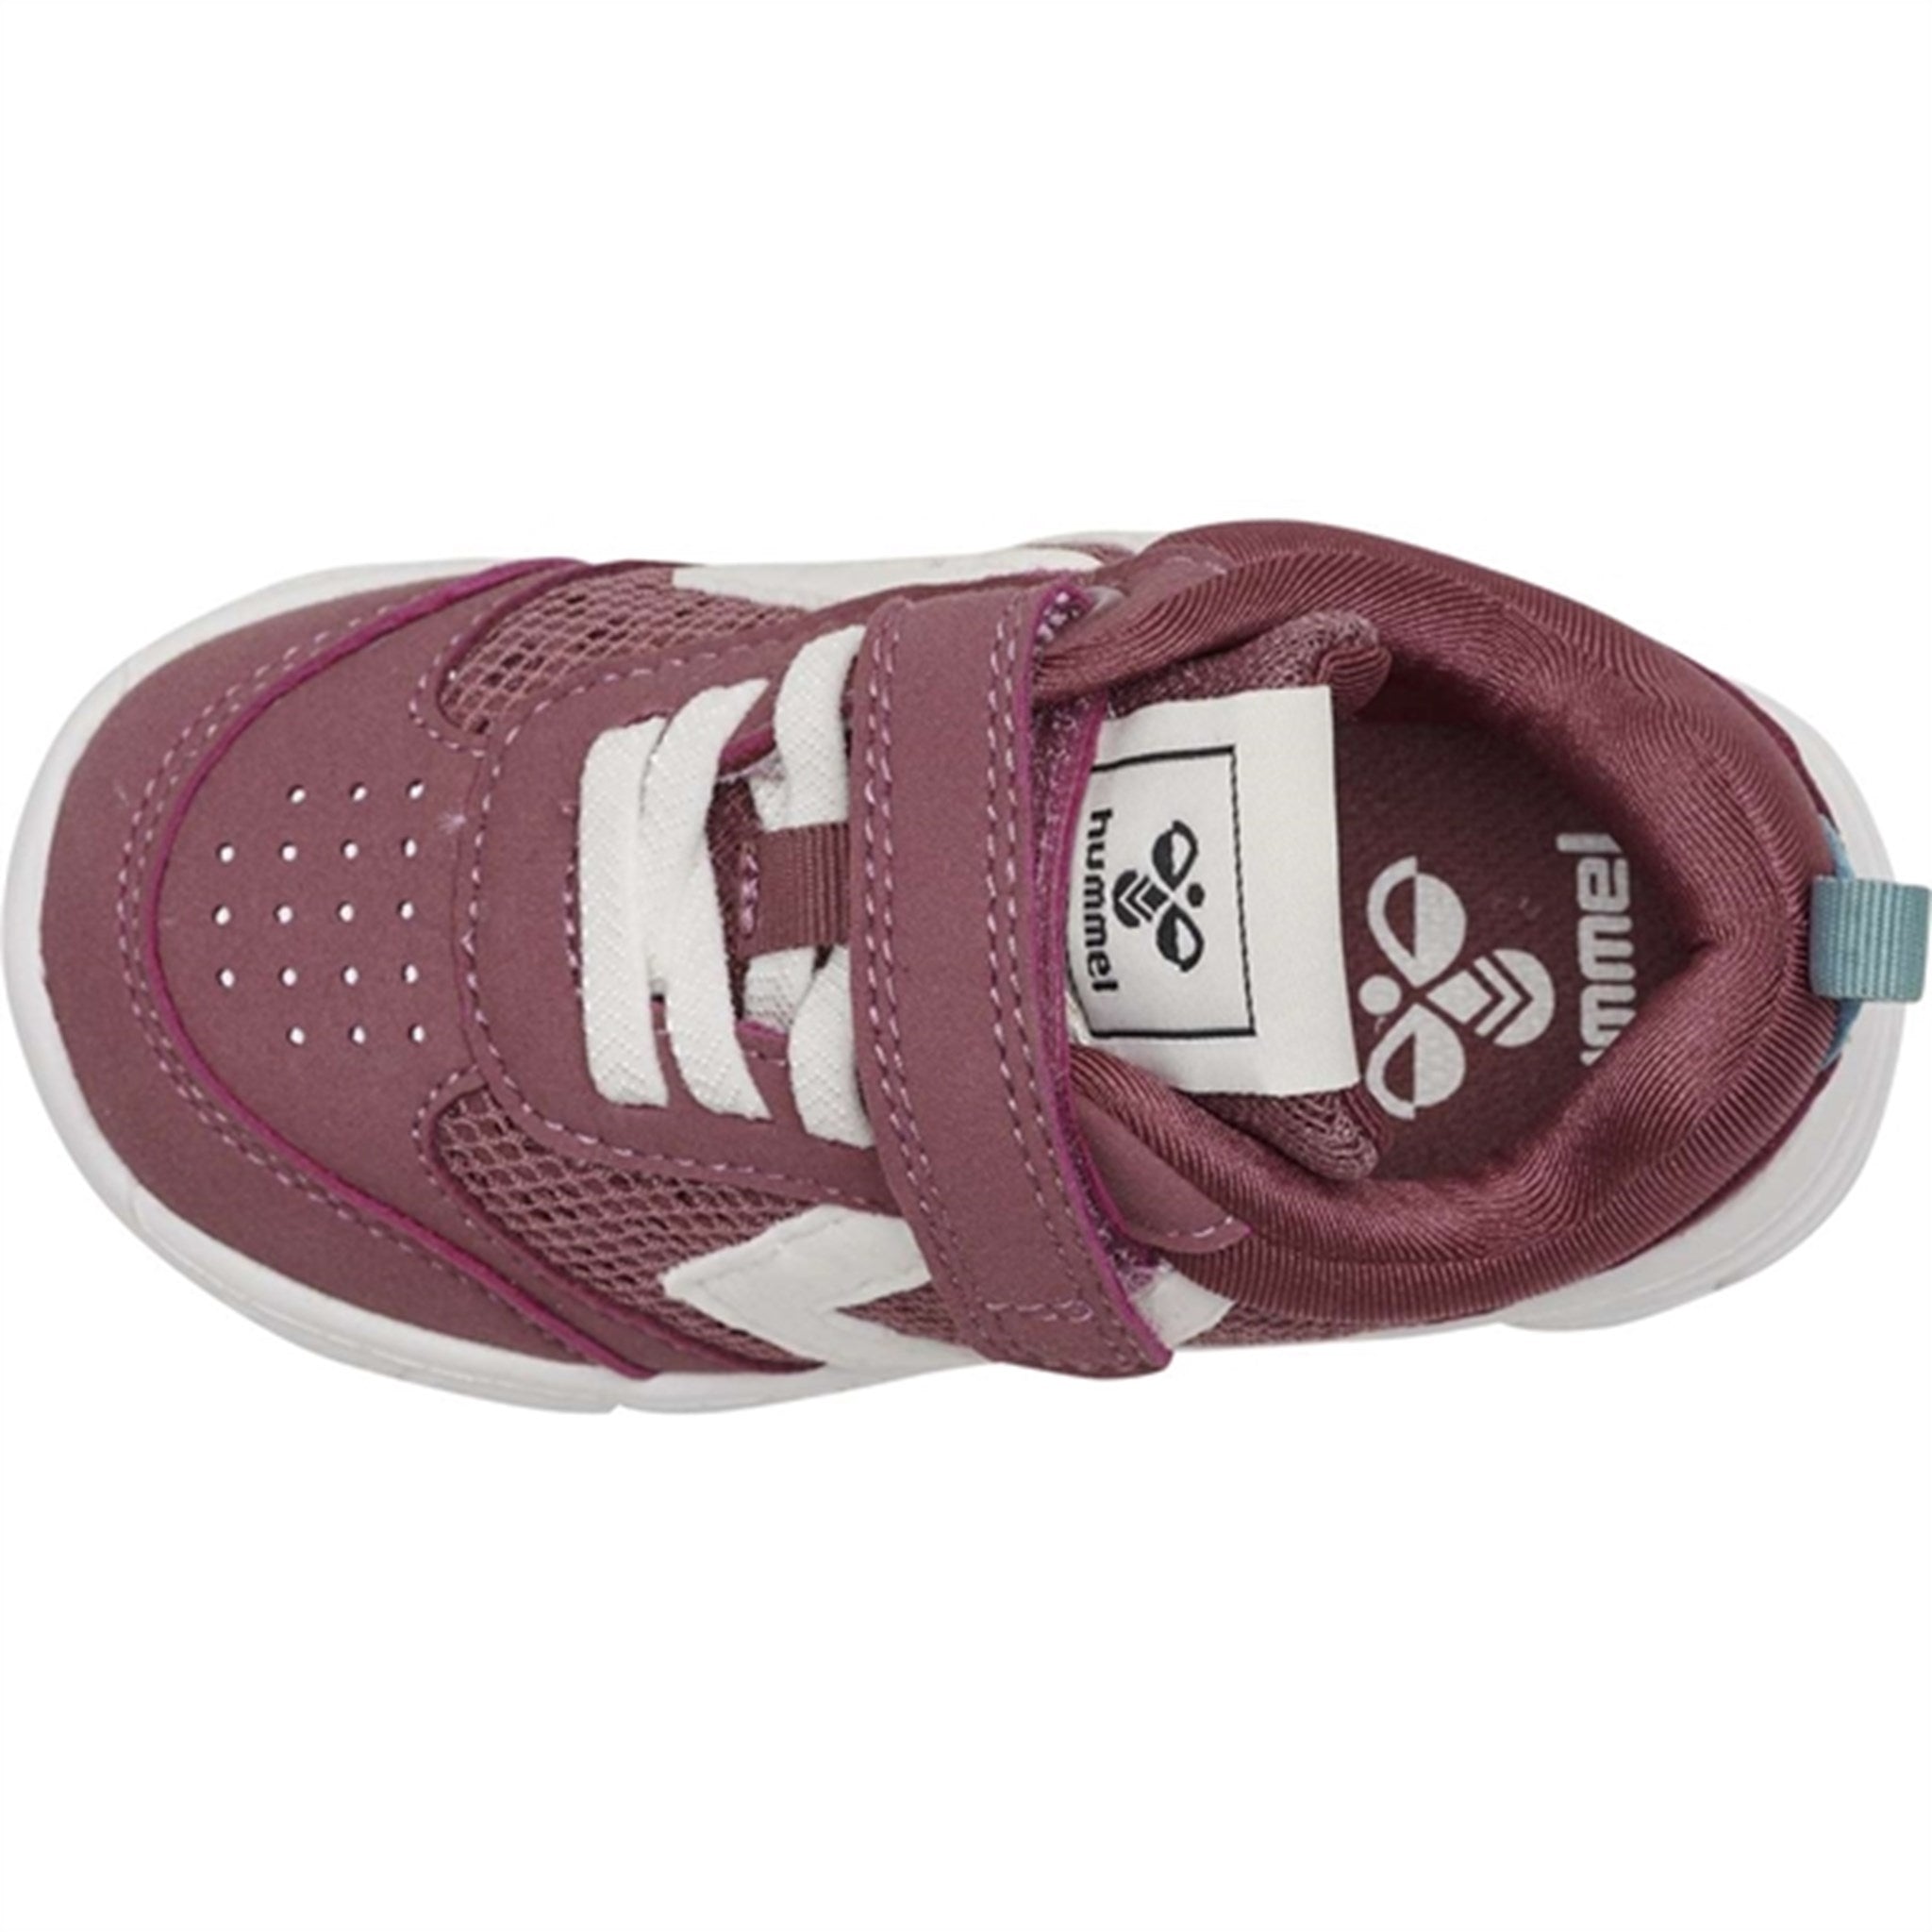 Hummel Crosslite Winter Infant Deco Rose Sneakers 5